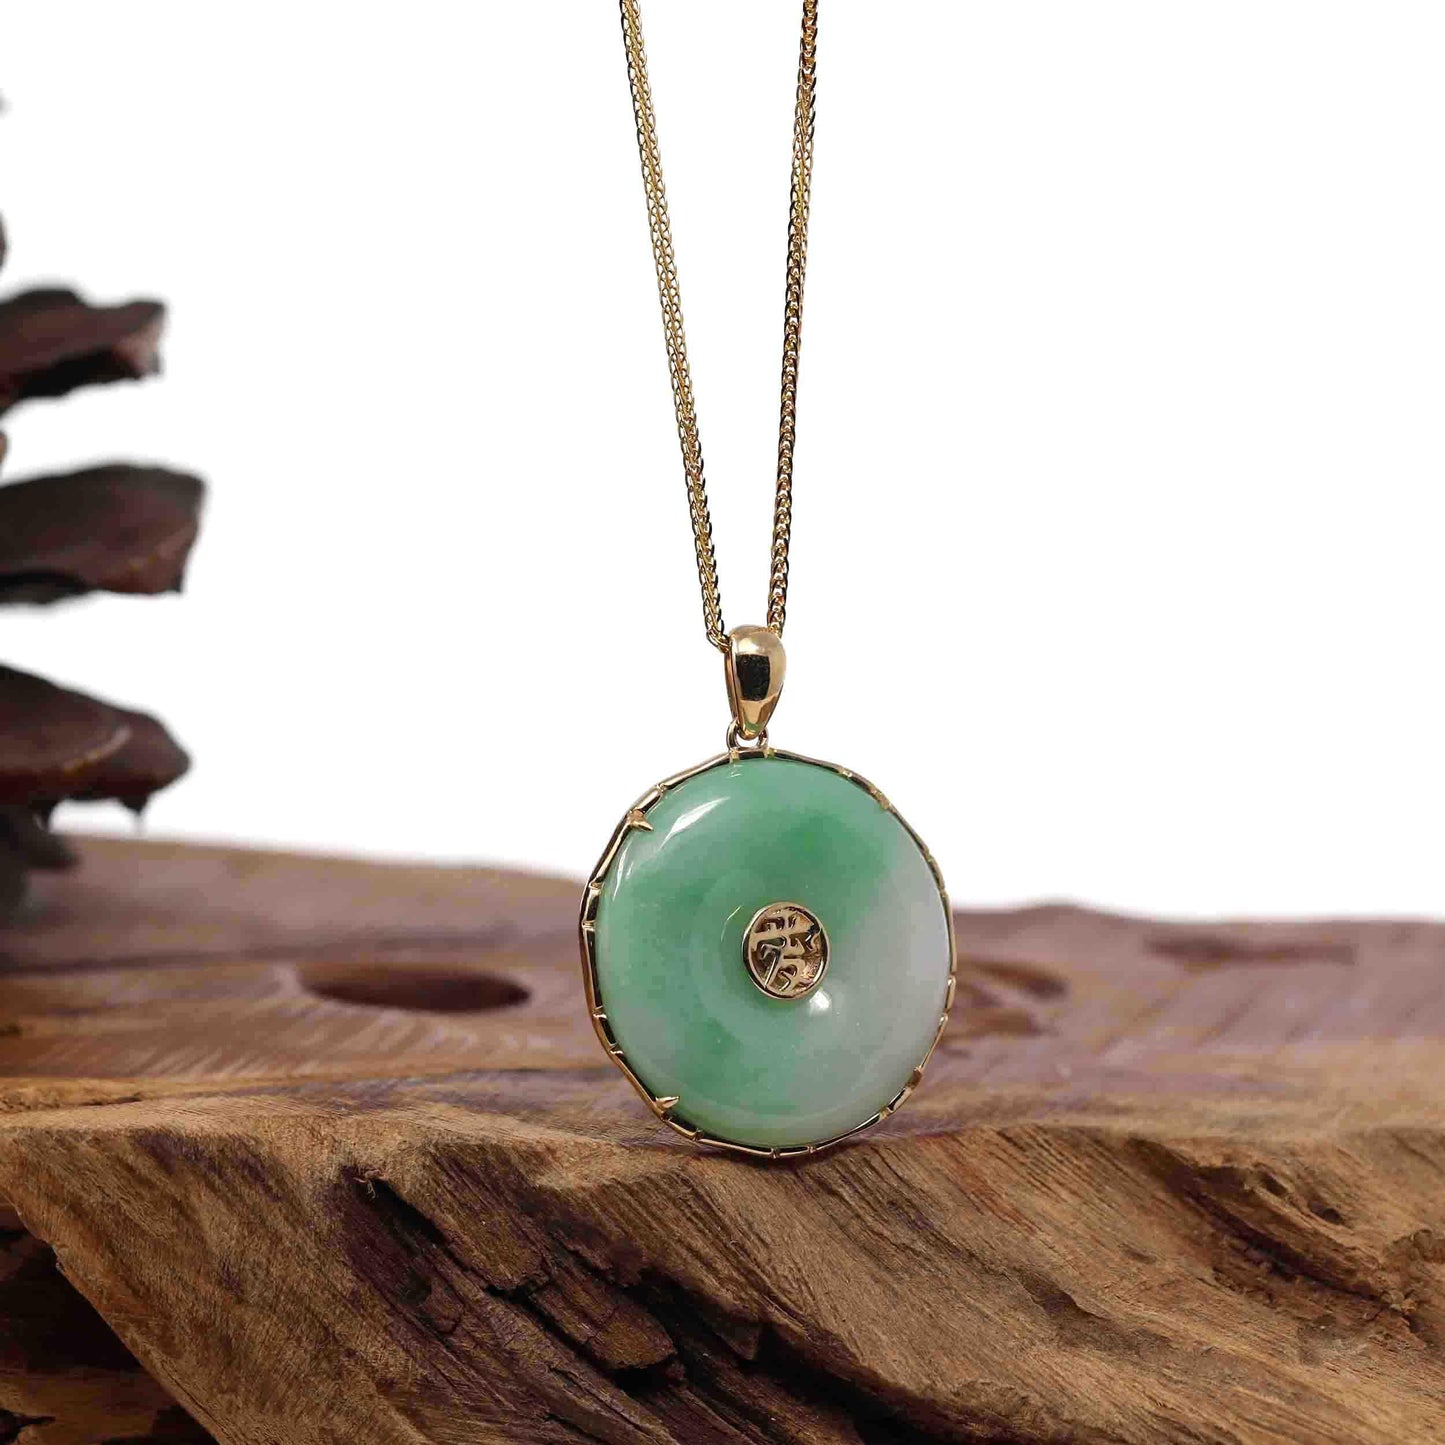 RealJade® Co. "Good Luck Button" Necklace Lavender Green Jadeite Jade Lucky KouKou Pendant Necklace